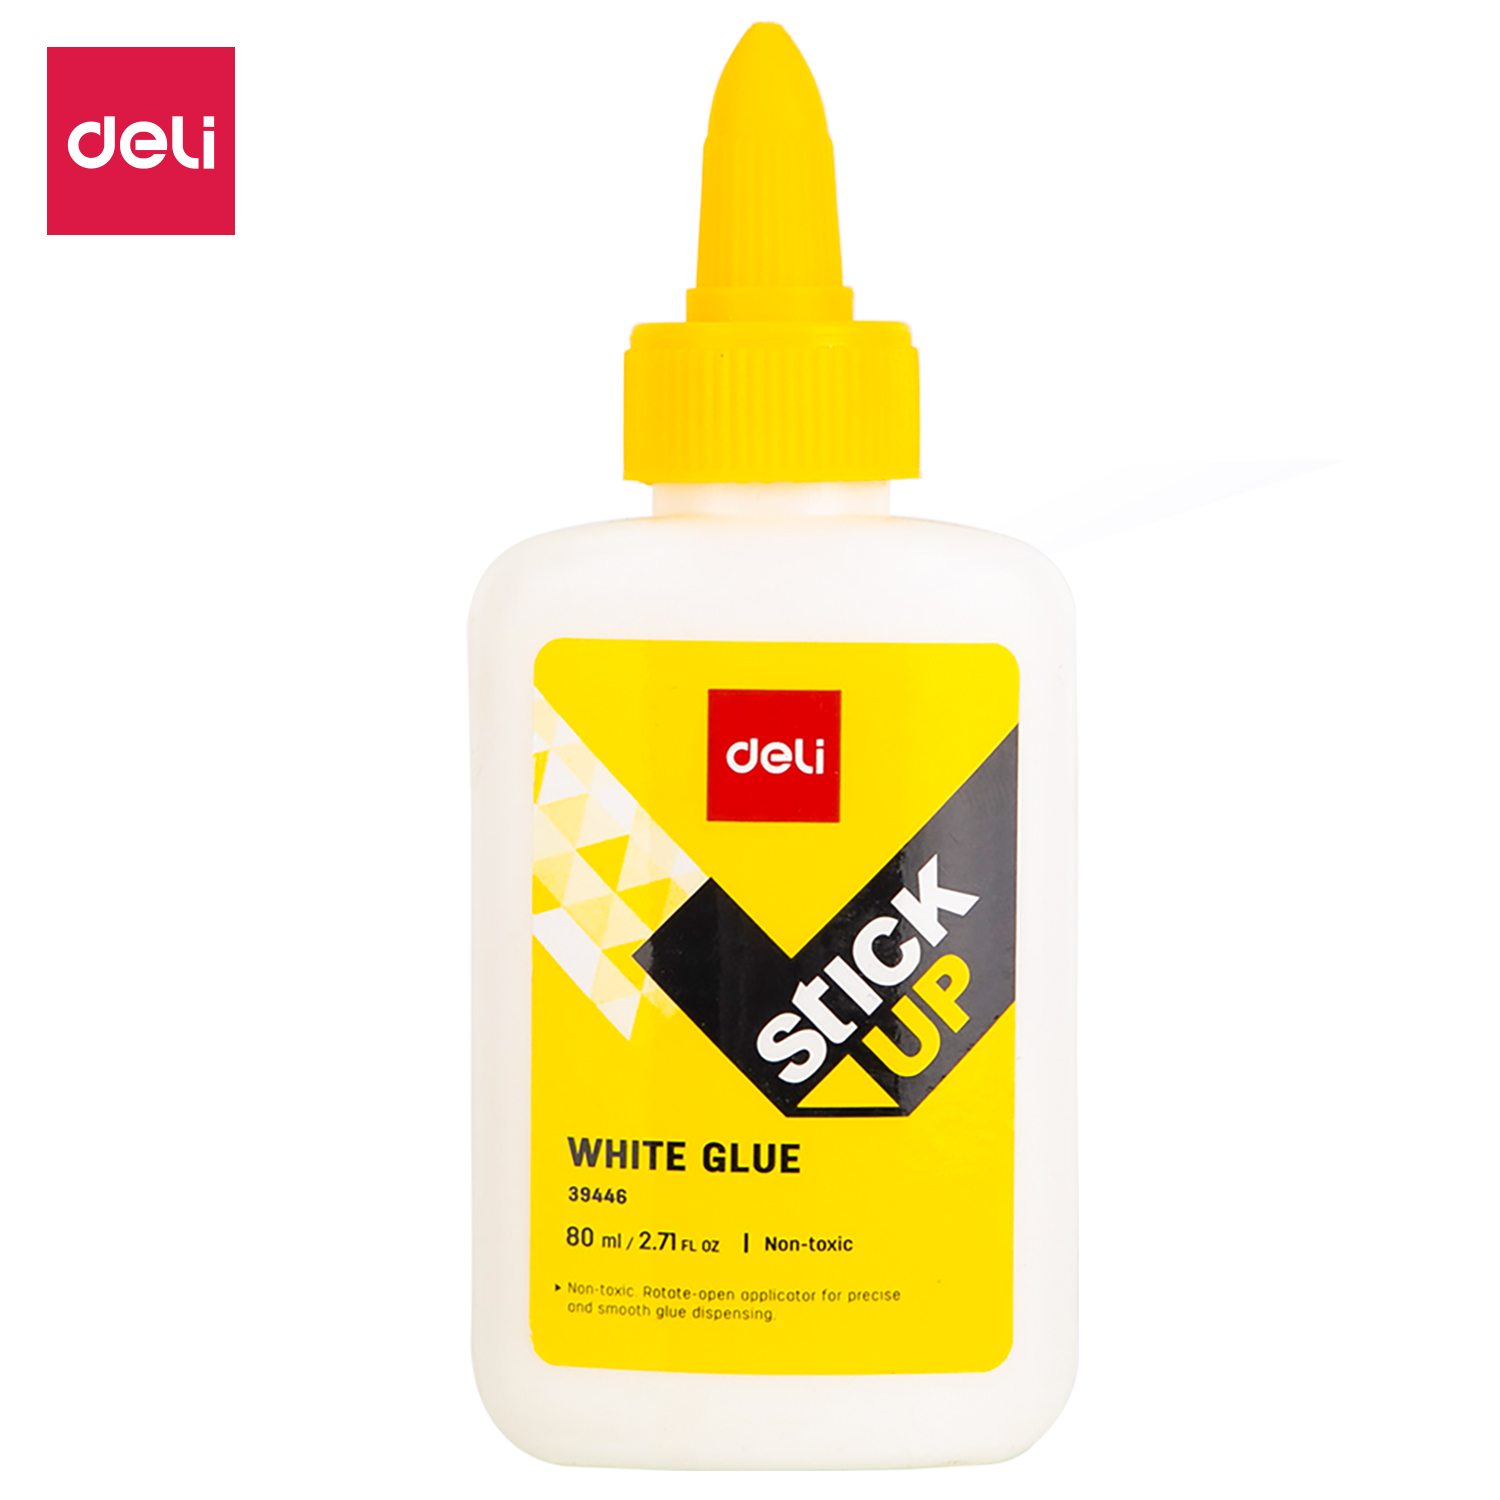 Deli-E39446white glue